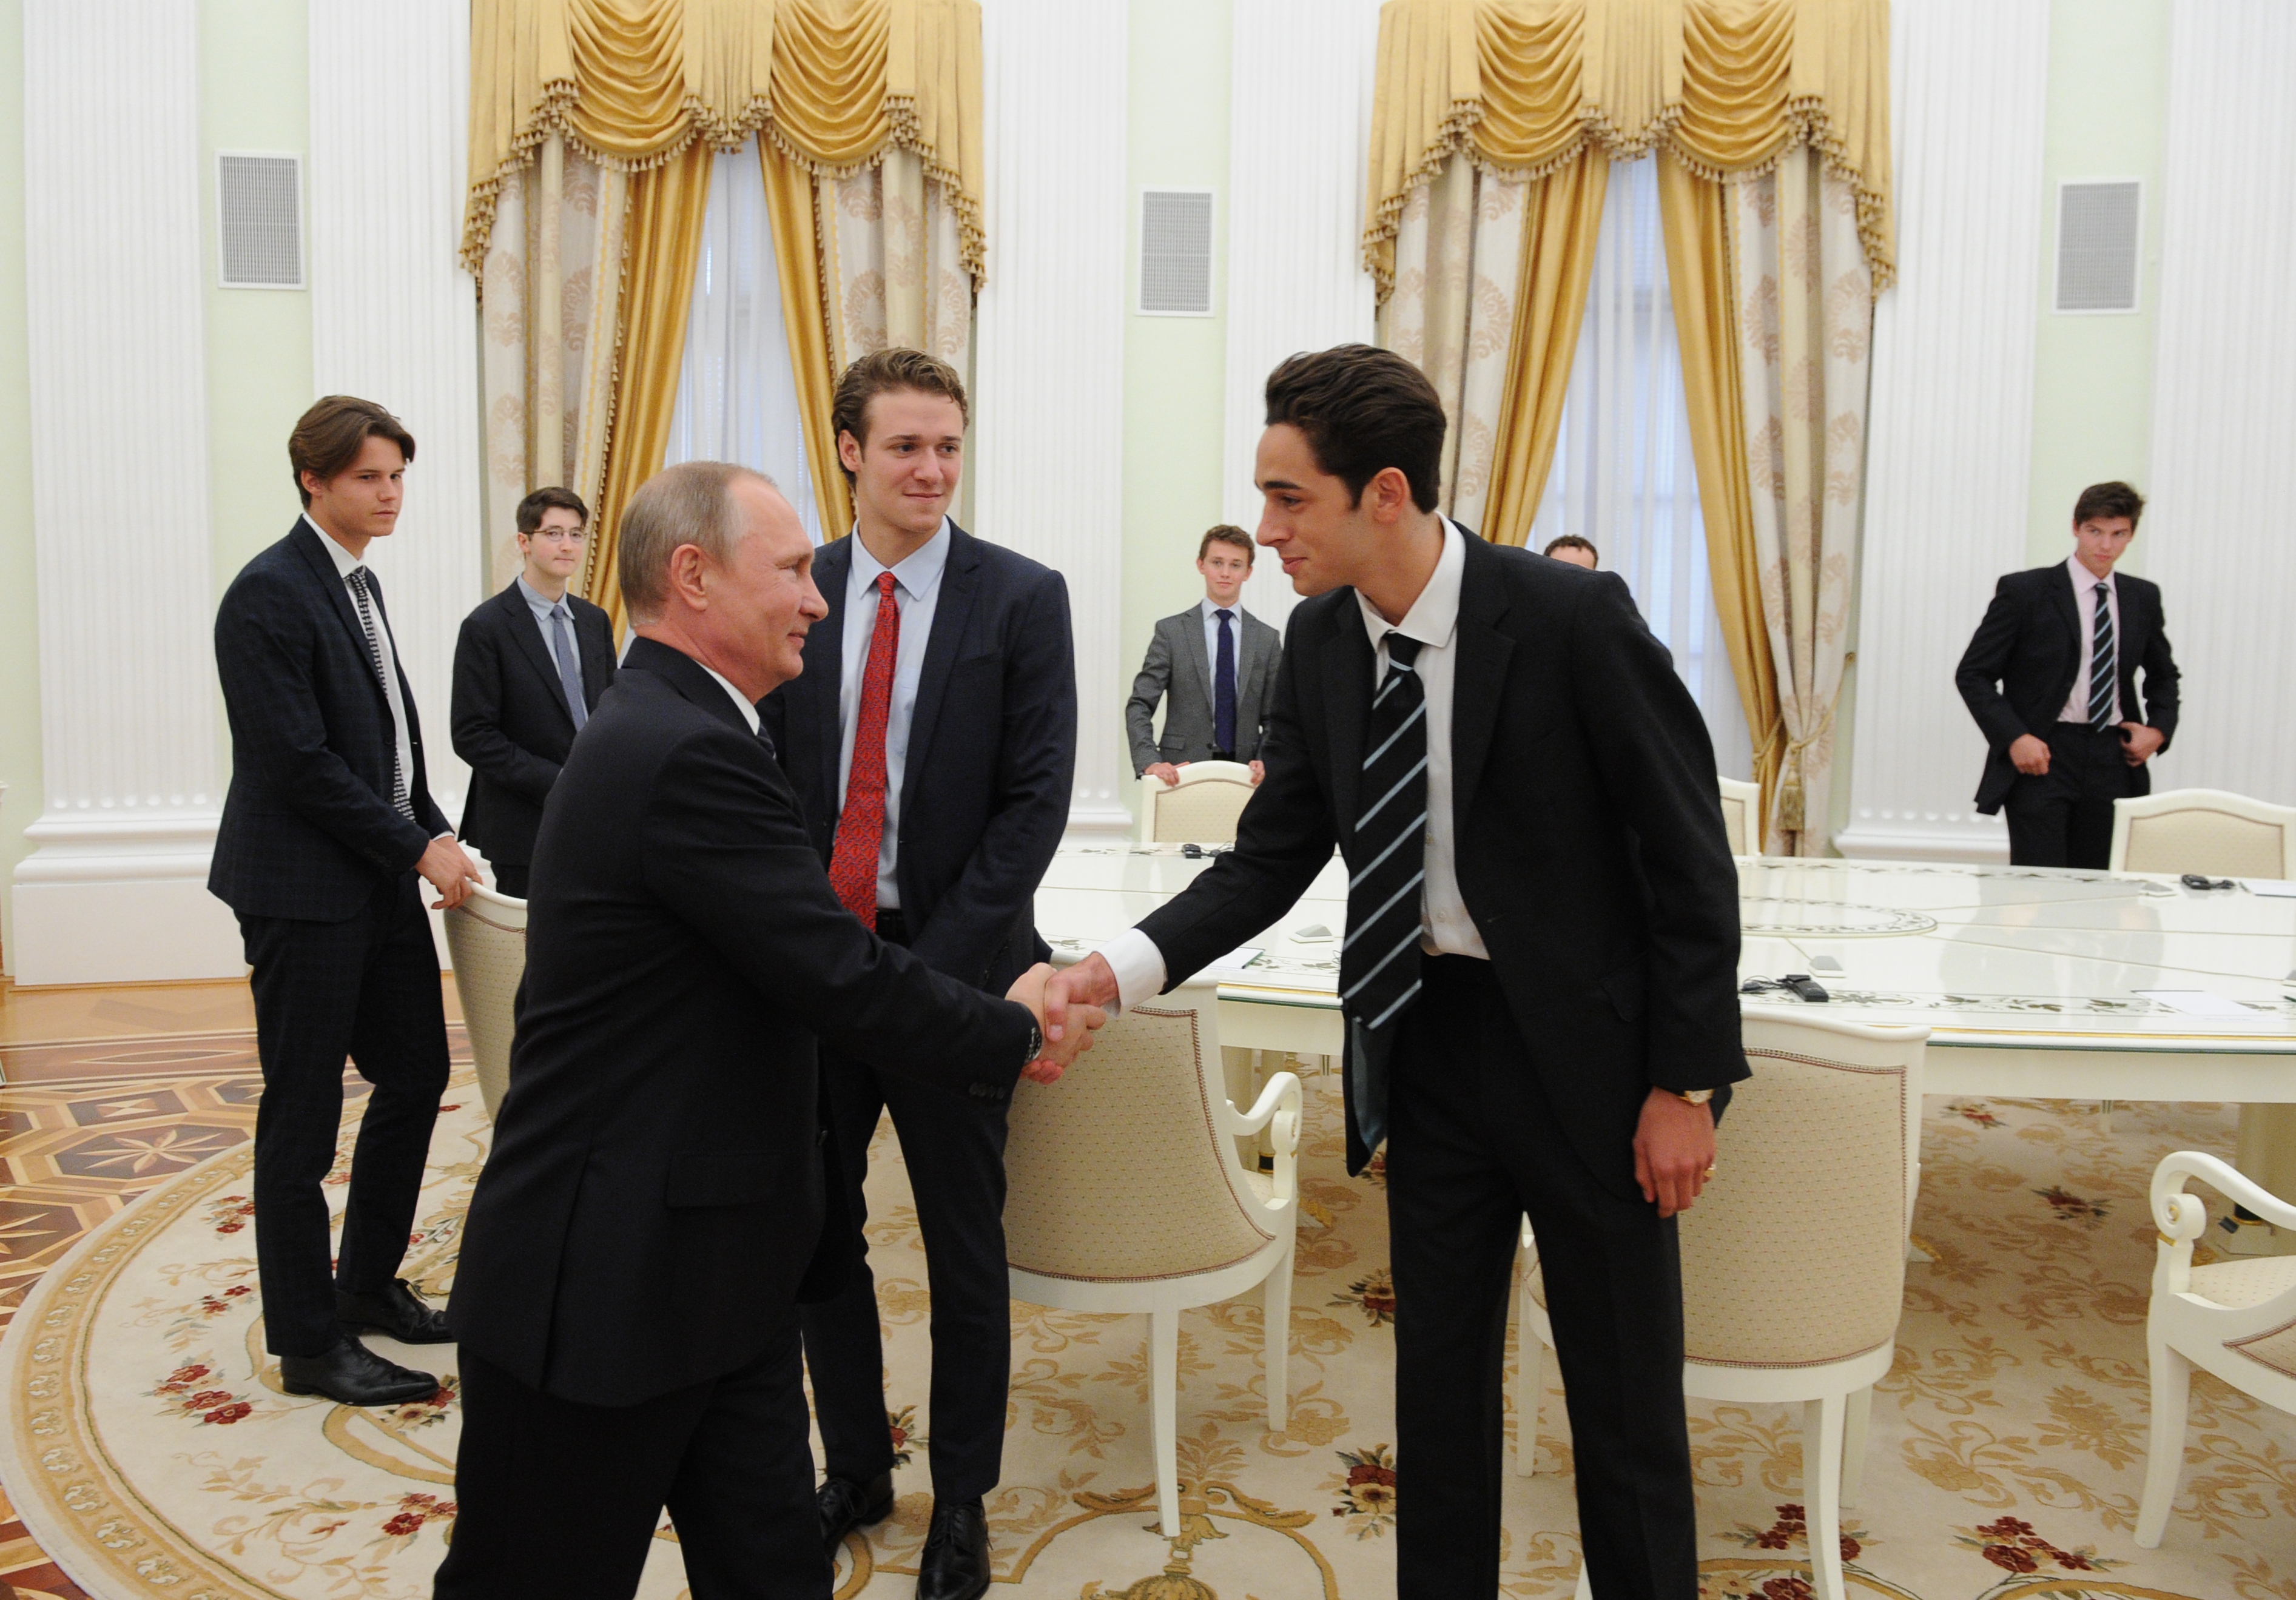 Russian President Vladimir Putin, foreground, left, meets with students at Eton College in the Kremlin. (Michael Klimentyev—Sputnik/AP)